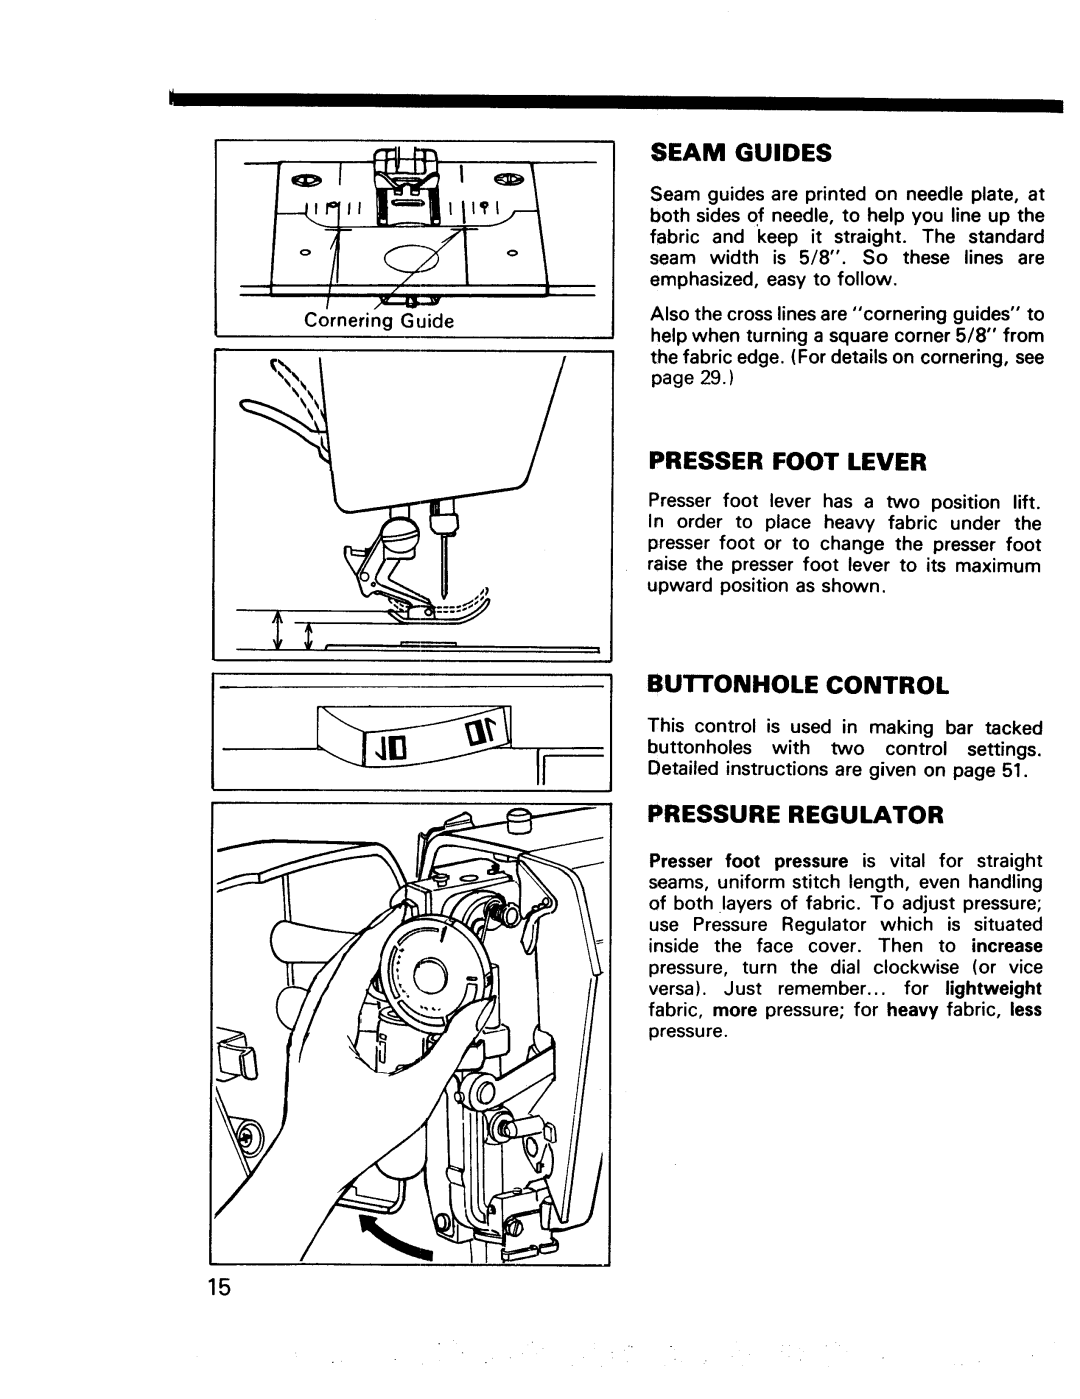 Kenmore 17920, 17922 manual Seam, Guides, Presser Foot Lever, Buttonhole Control, Pressure Regulator 